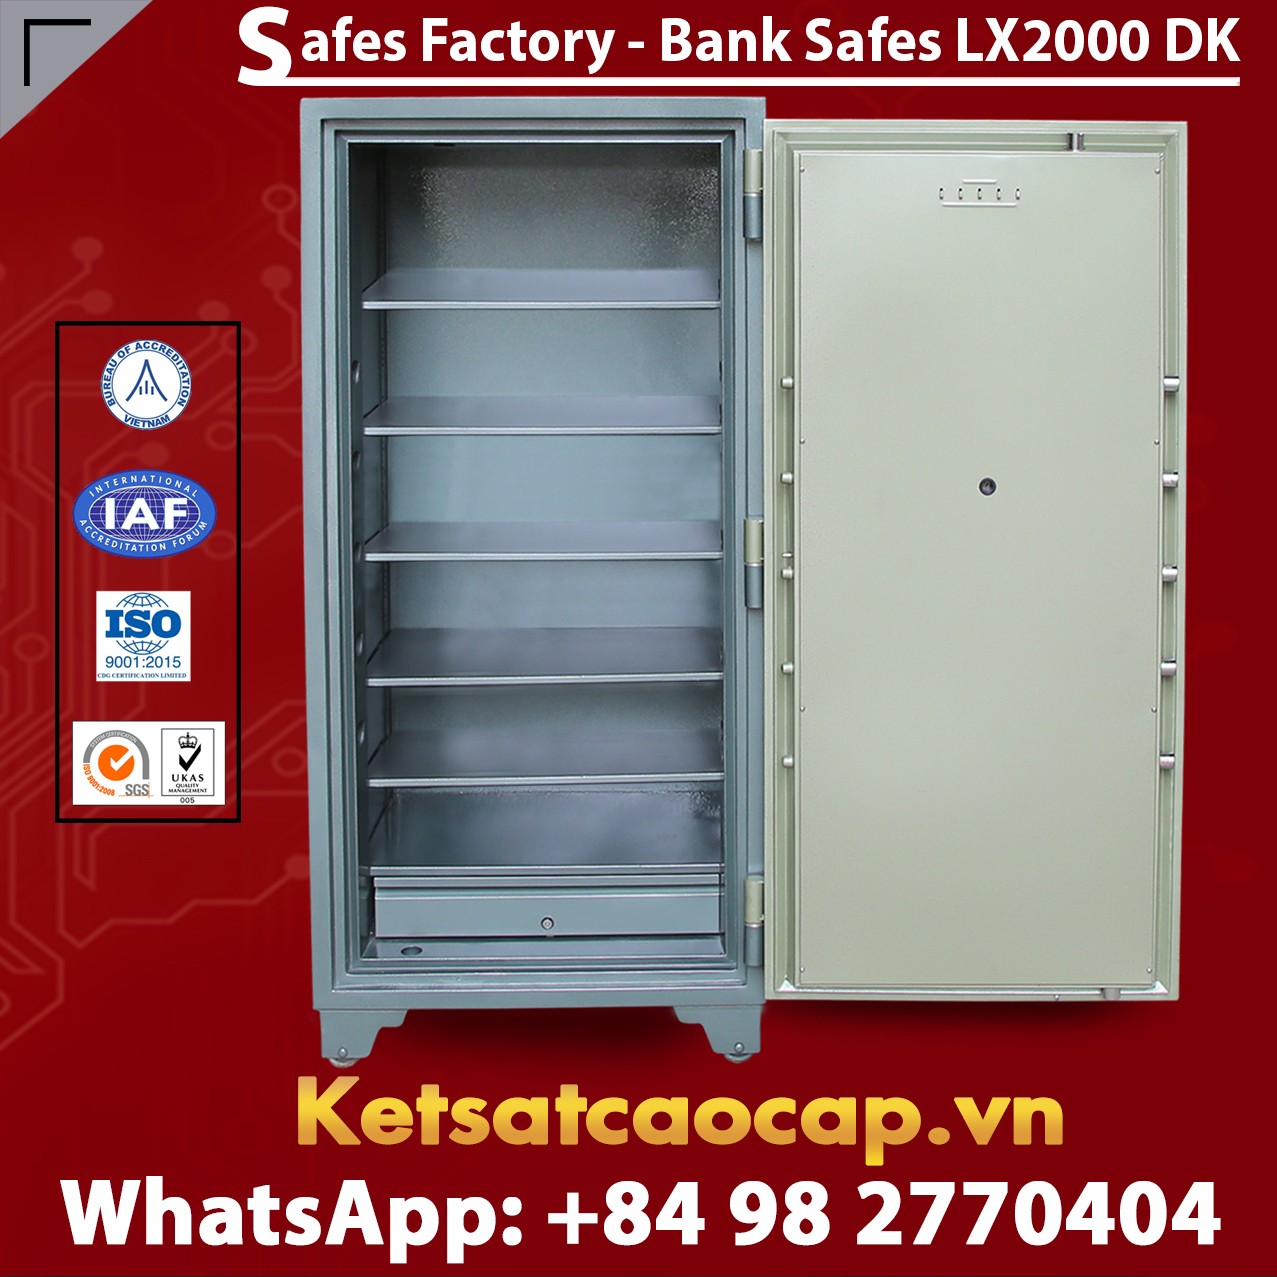 Bank Safes LX2000 DK Customized Design Mechanical Lock System